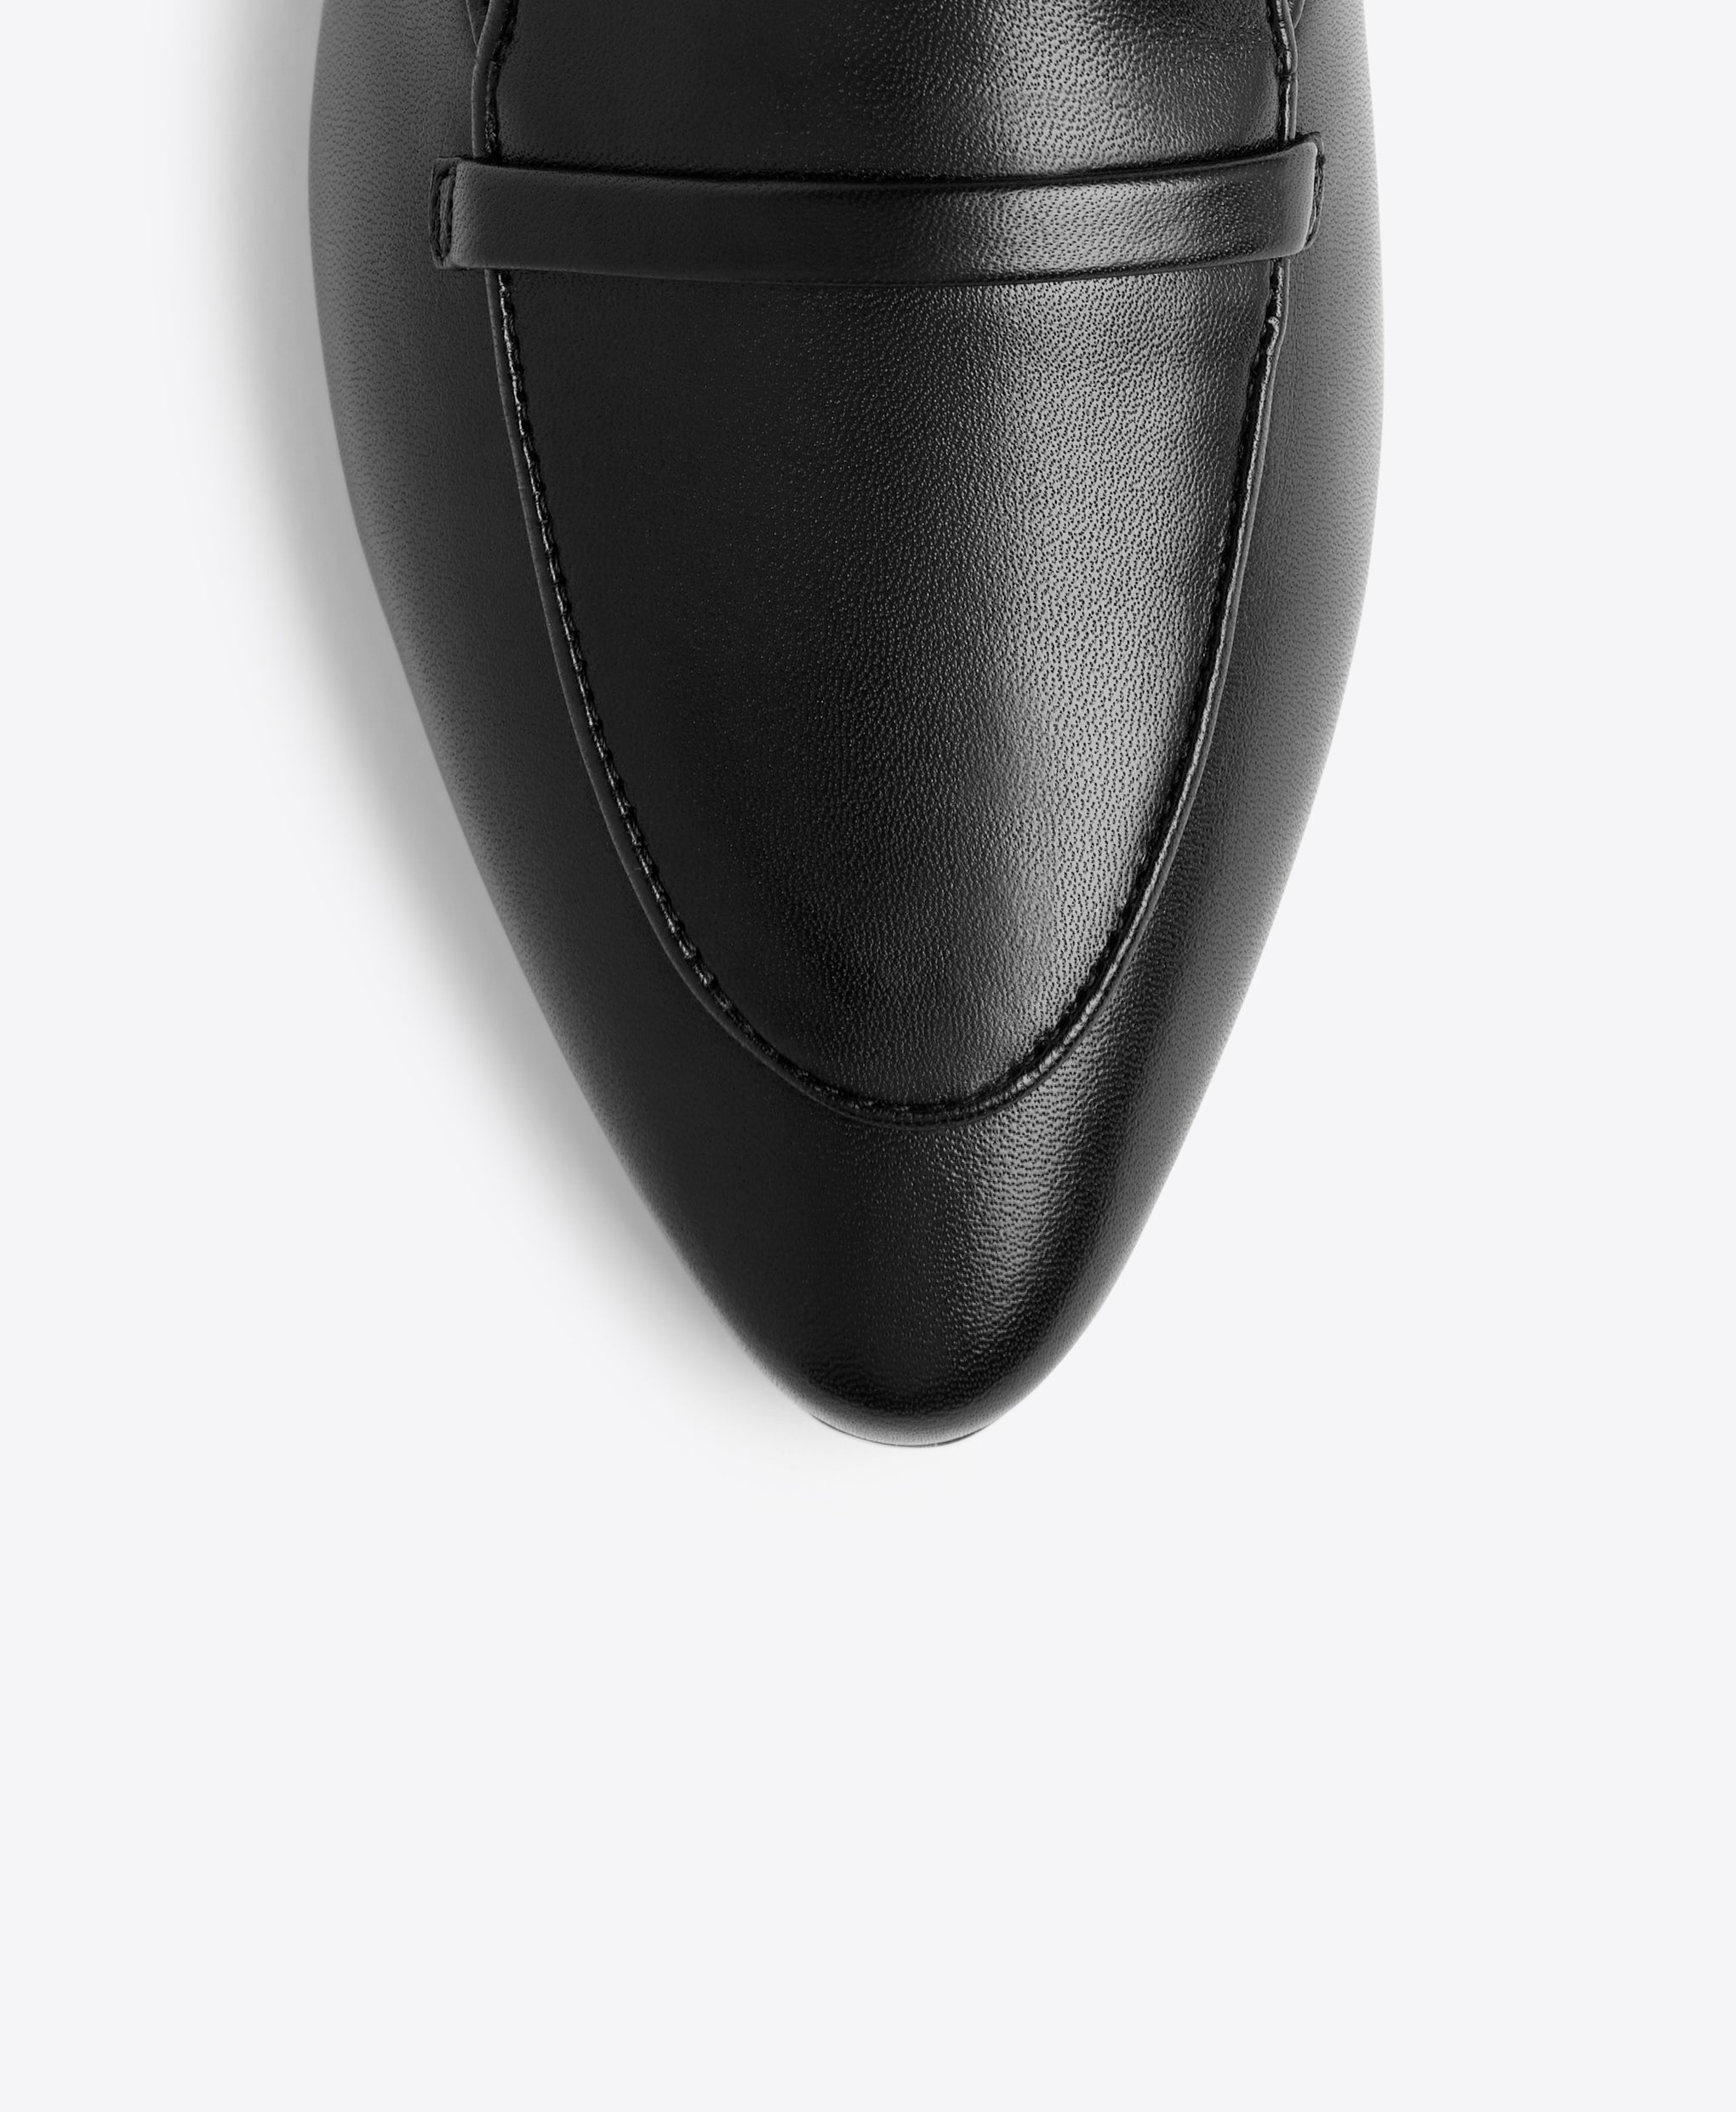 Malone Souliers Berto Flat Black Leather Slides